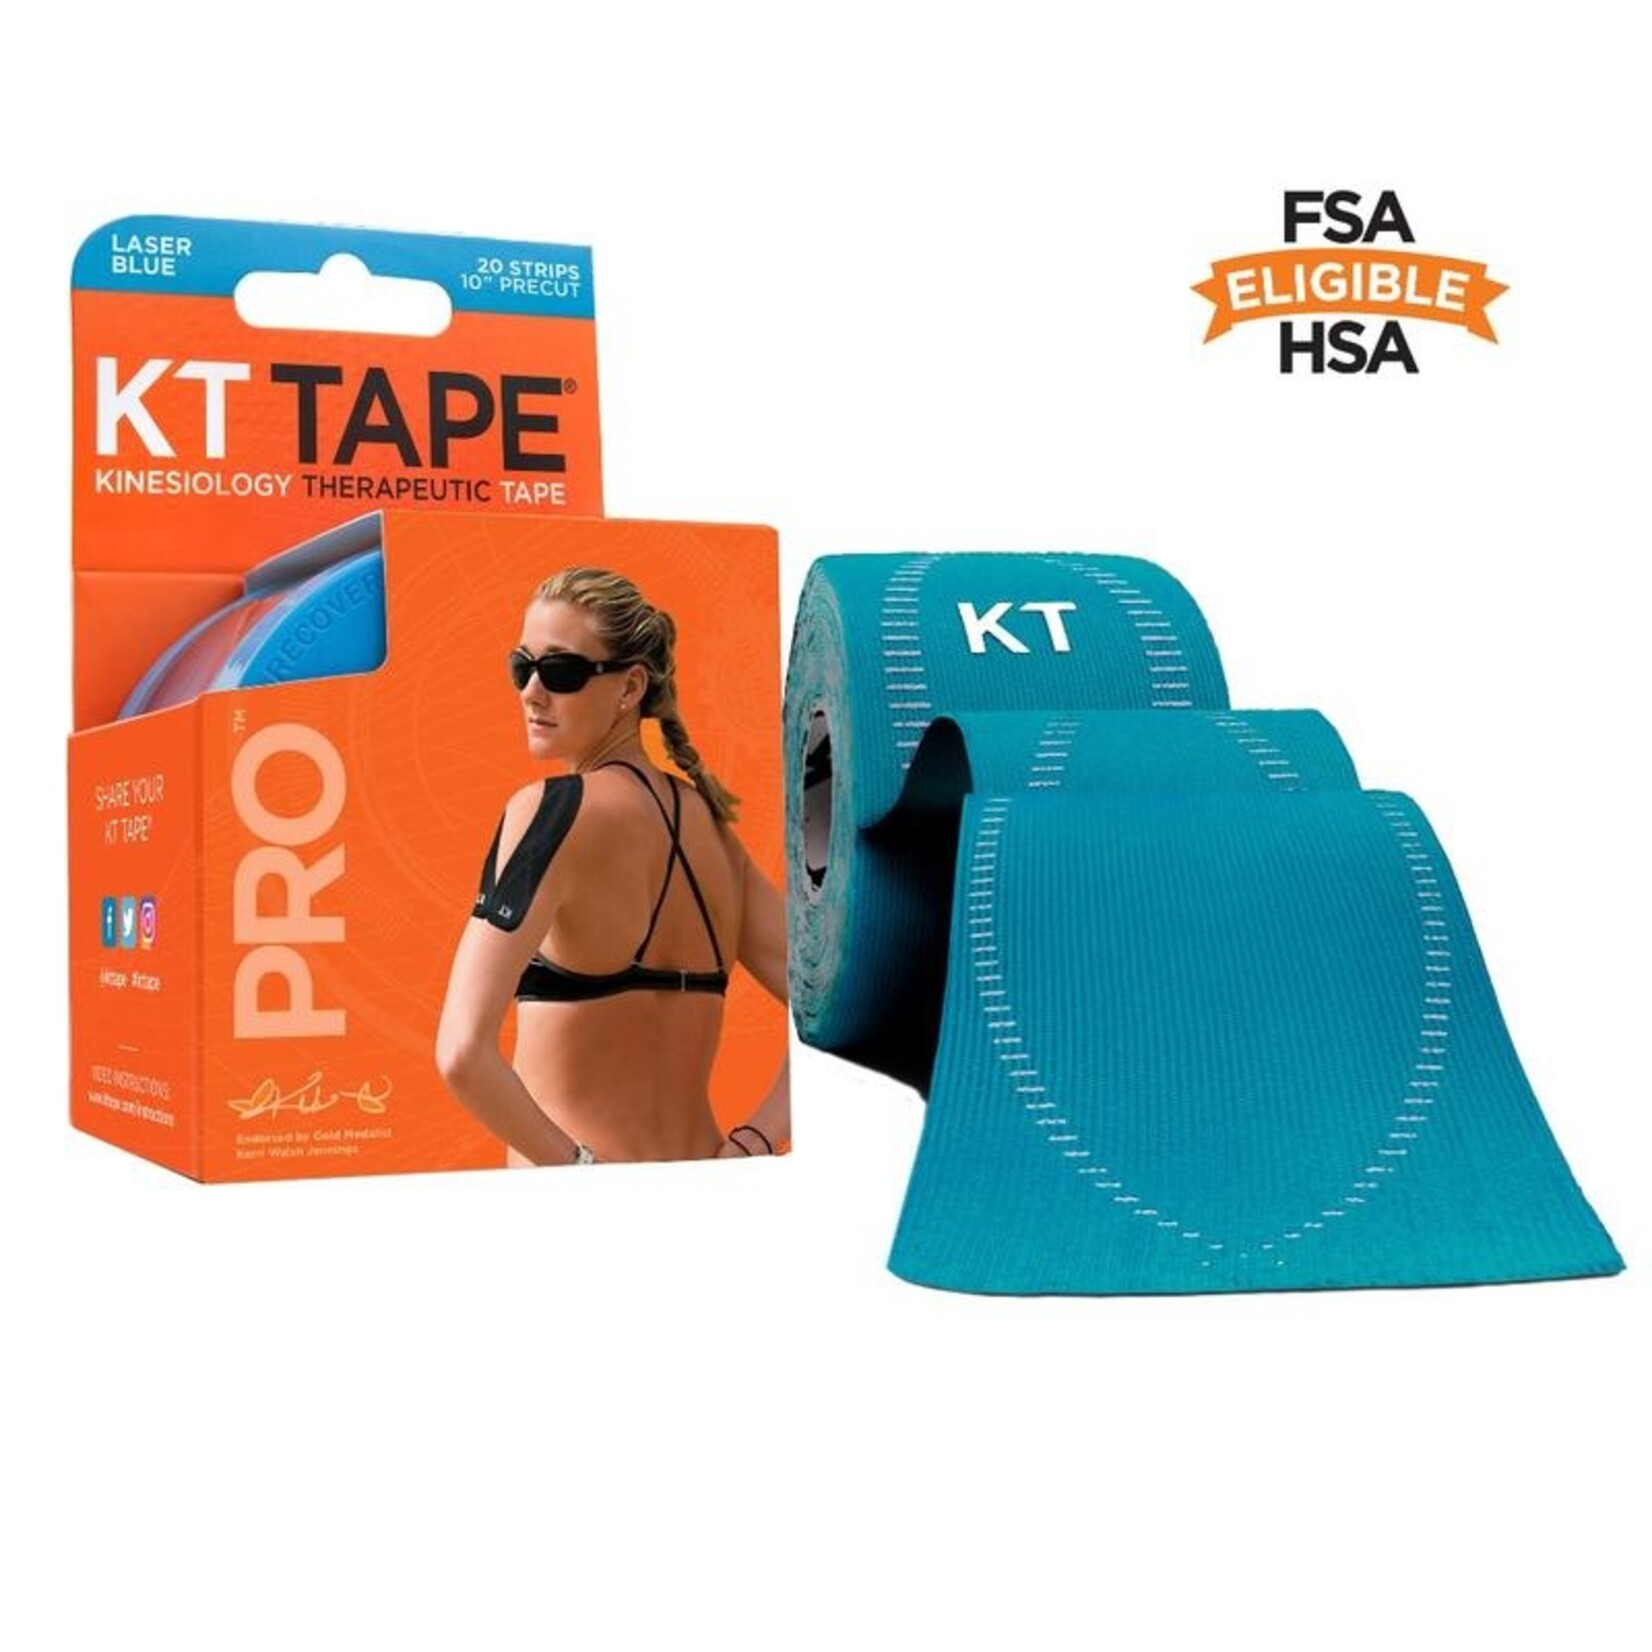 KT Tape KT Tape Pro Synthetic 20 Strips 10" Precut